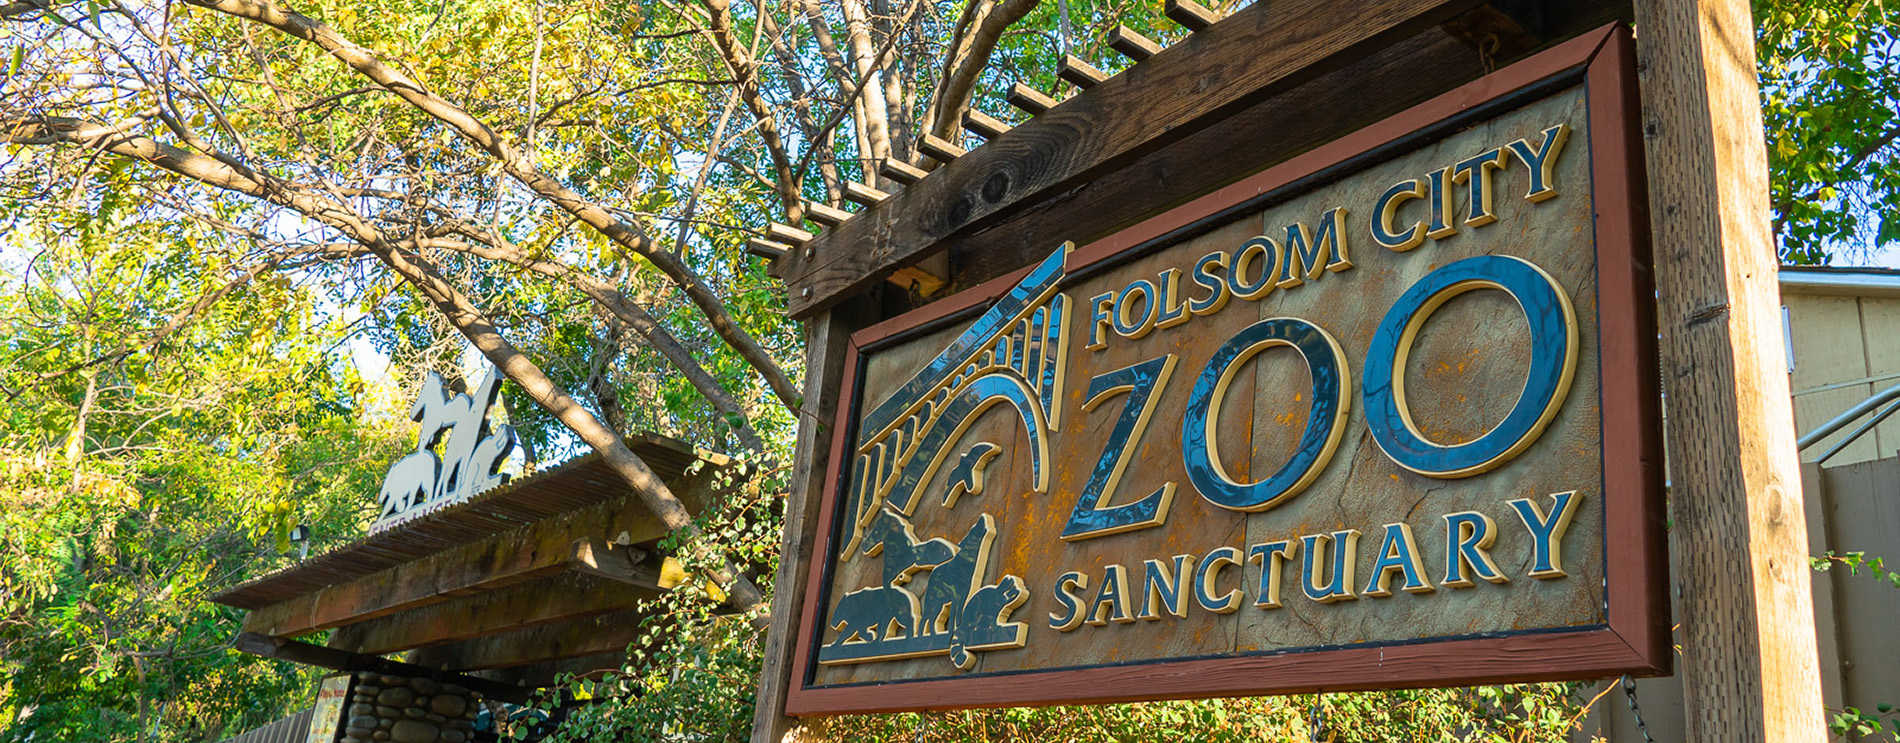 Folsom Zoo Sanctuary sign